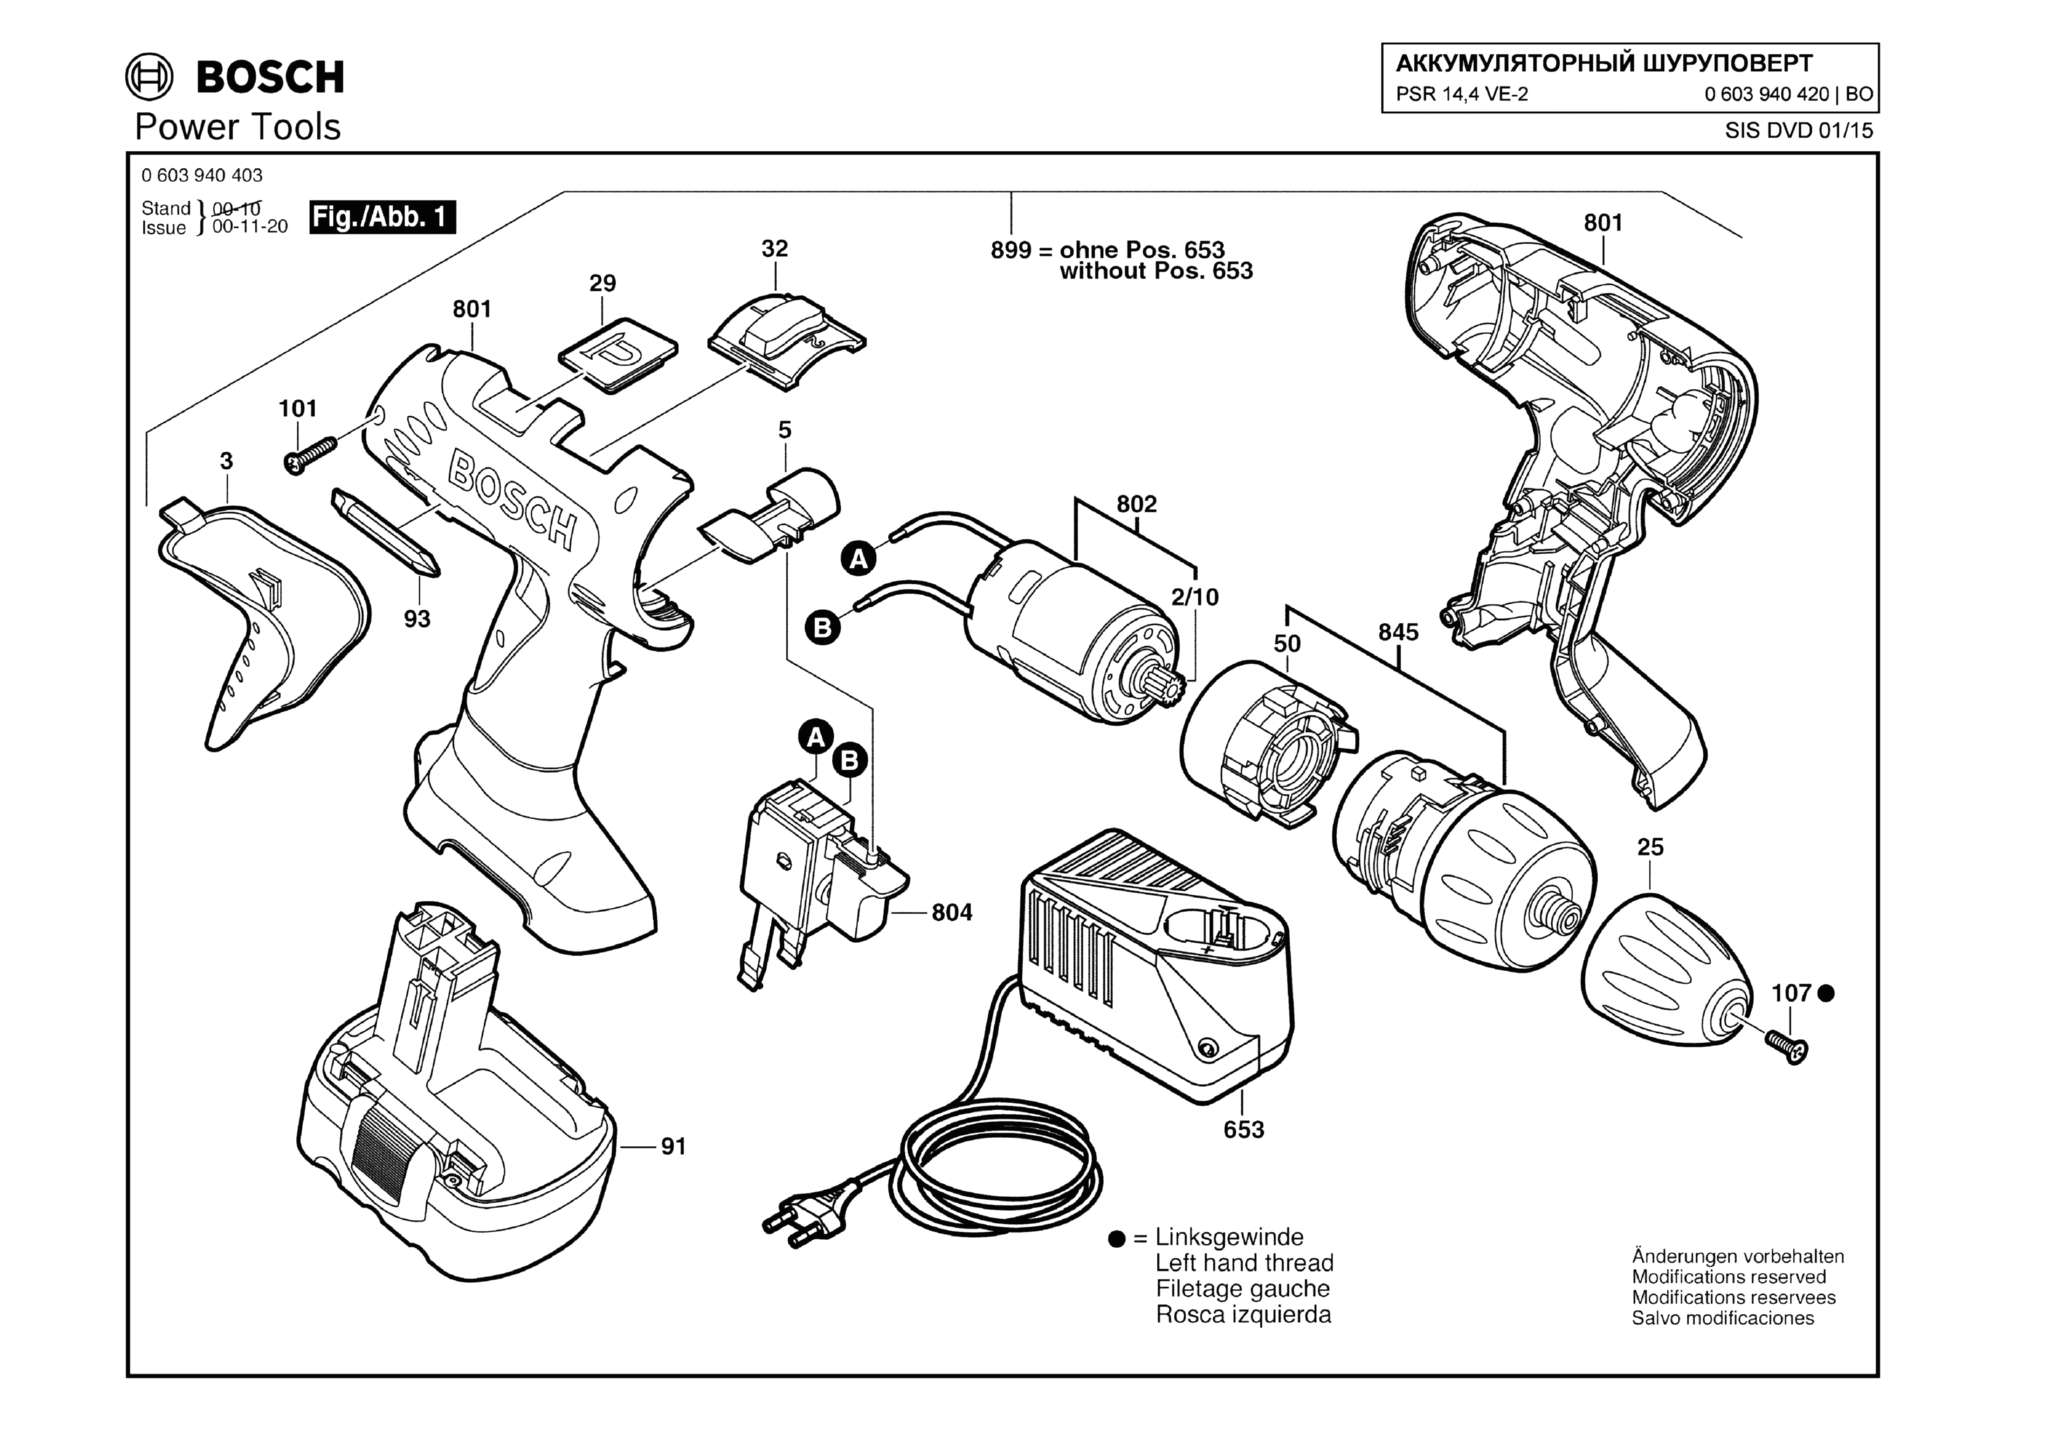 Запчасти, схема и деталировка Bosch PSR 14,4 VE-2 (ТИП 0603940420)